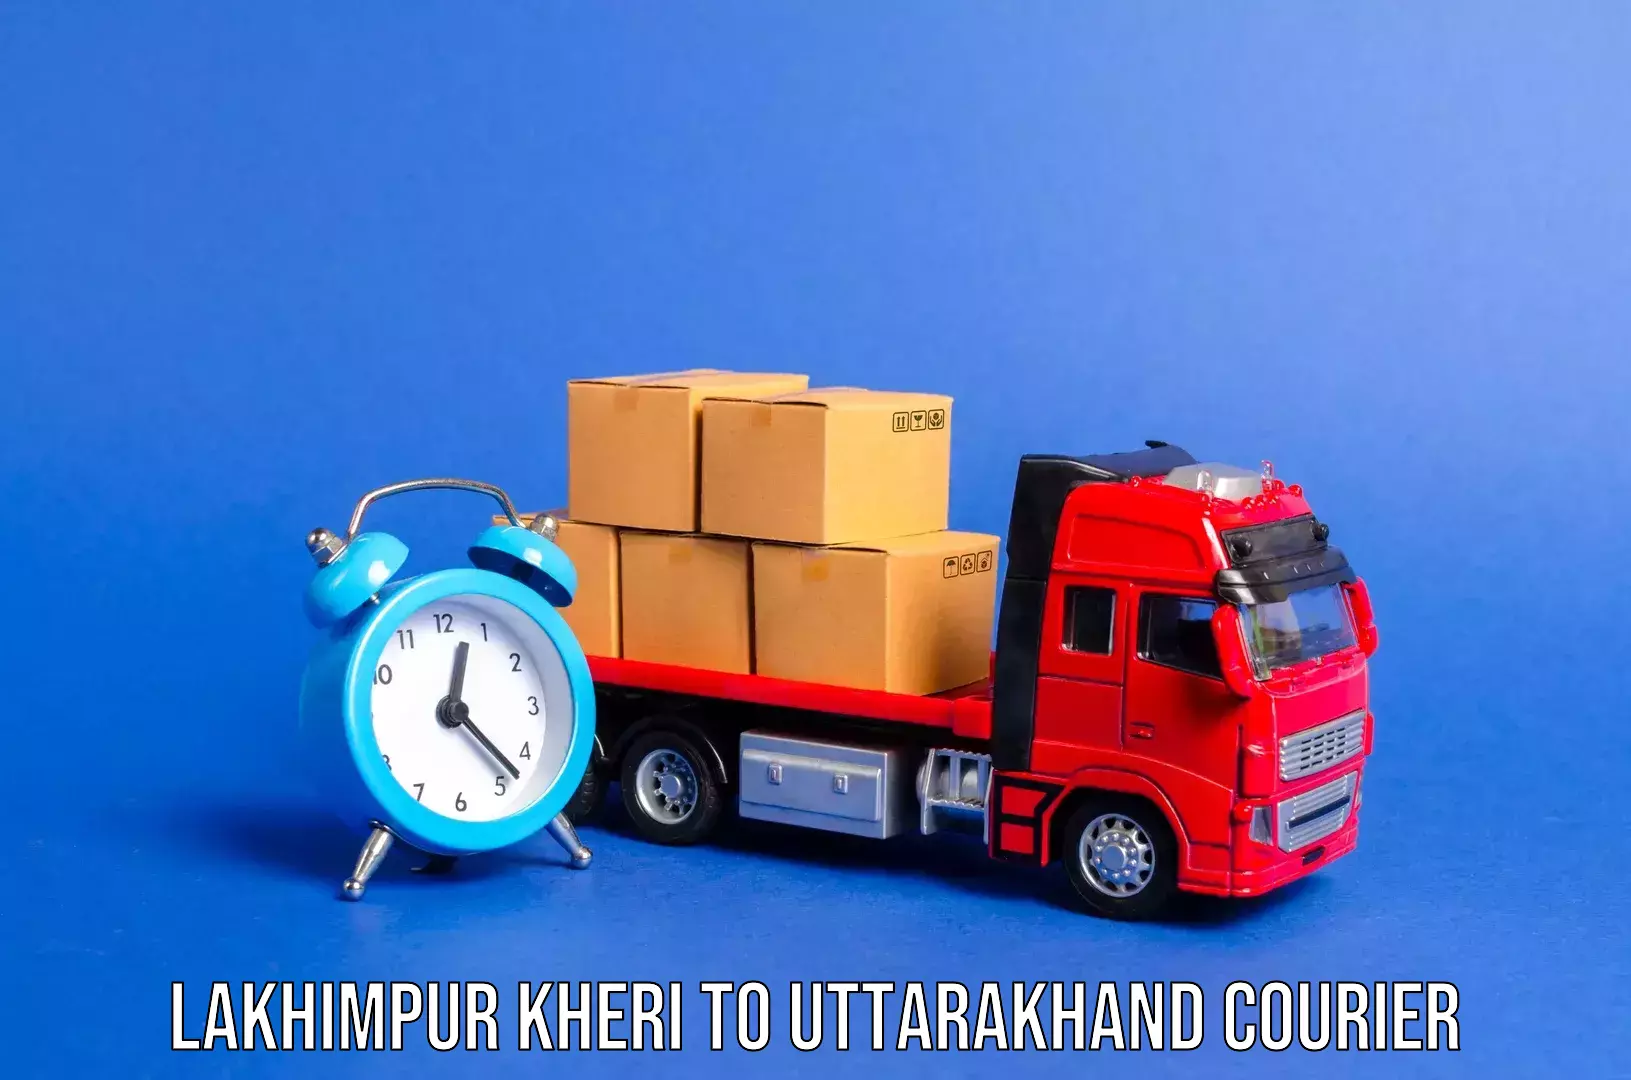 Luggage shipment specialists Lakhimpur Kheri to Udham Singh Nagar